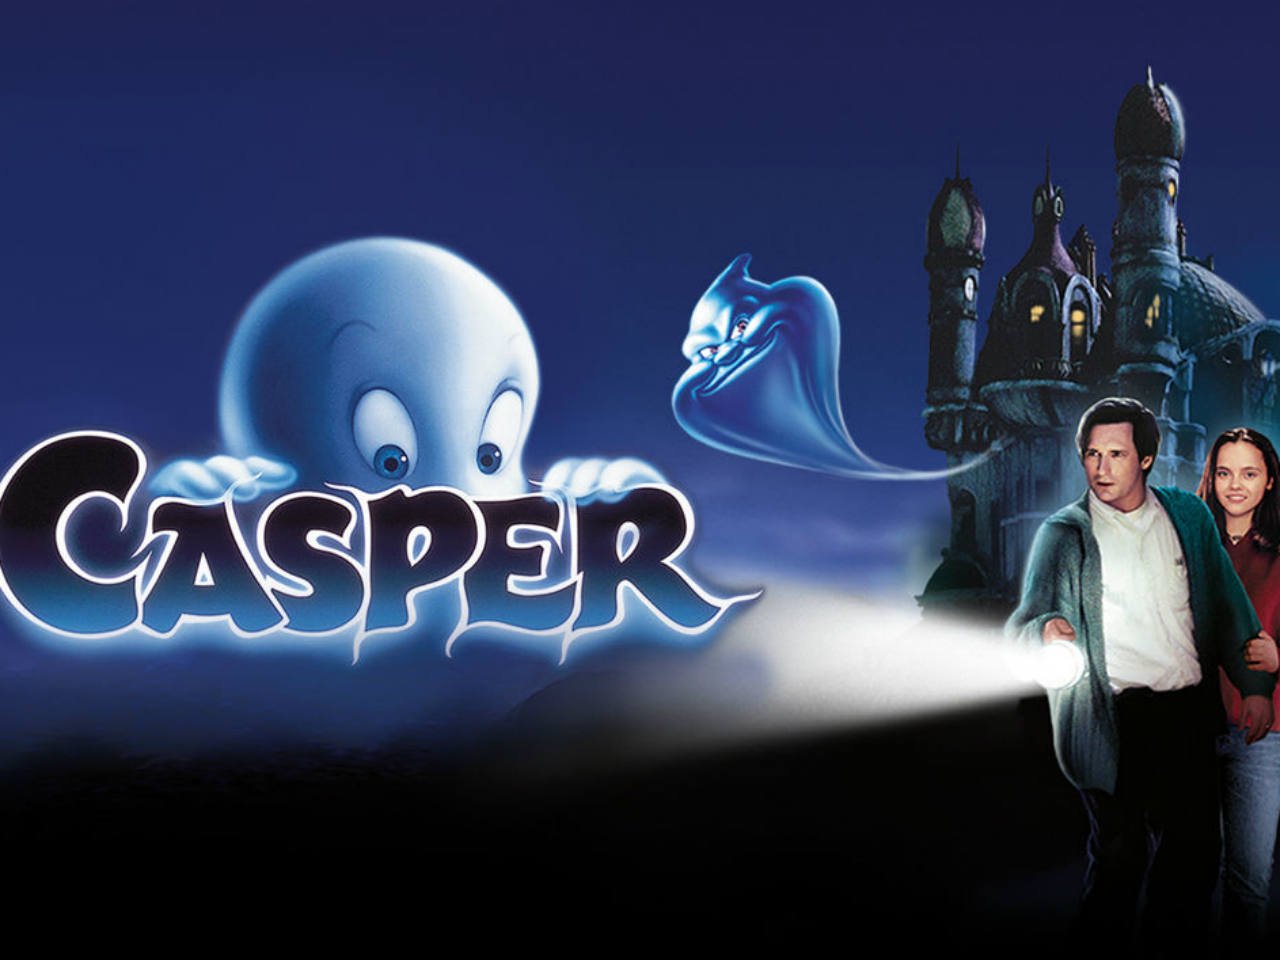 Movie poster from the kids' movie Casper